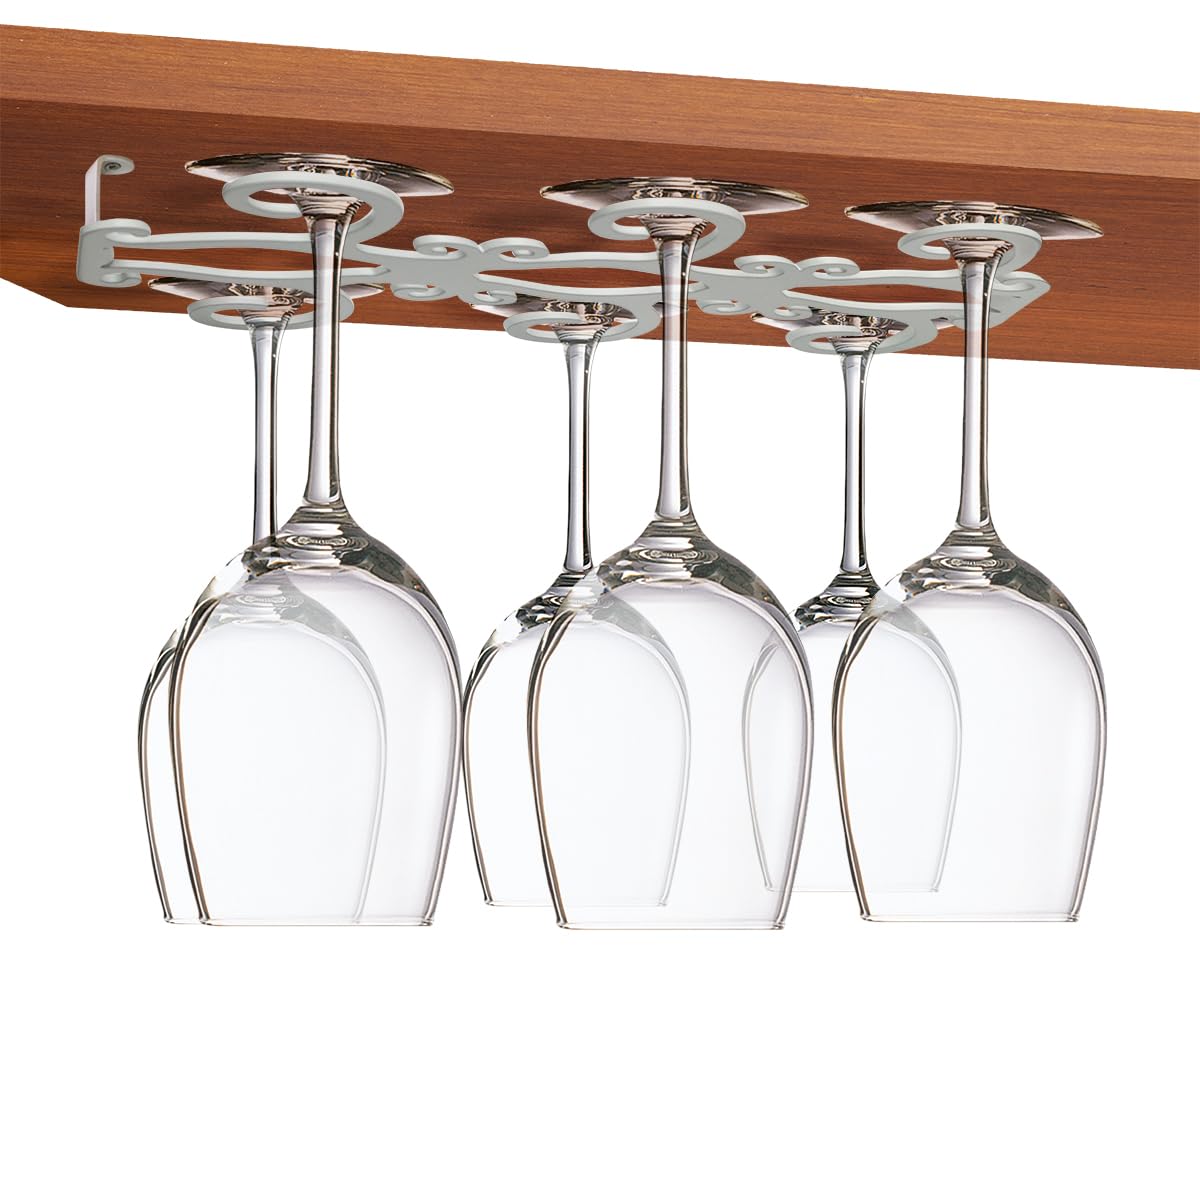 GeLive Under Cabinet Wine Glass Holder Stemware Rack 6 Hook Wine Glass Hanger Space Saver Storage Organizer for Kitchen and Bar Butterfly Shape (White)